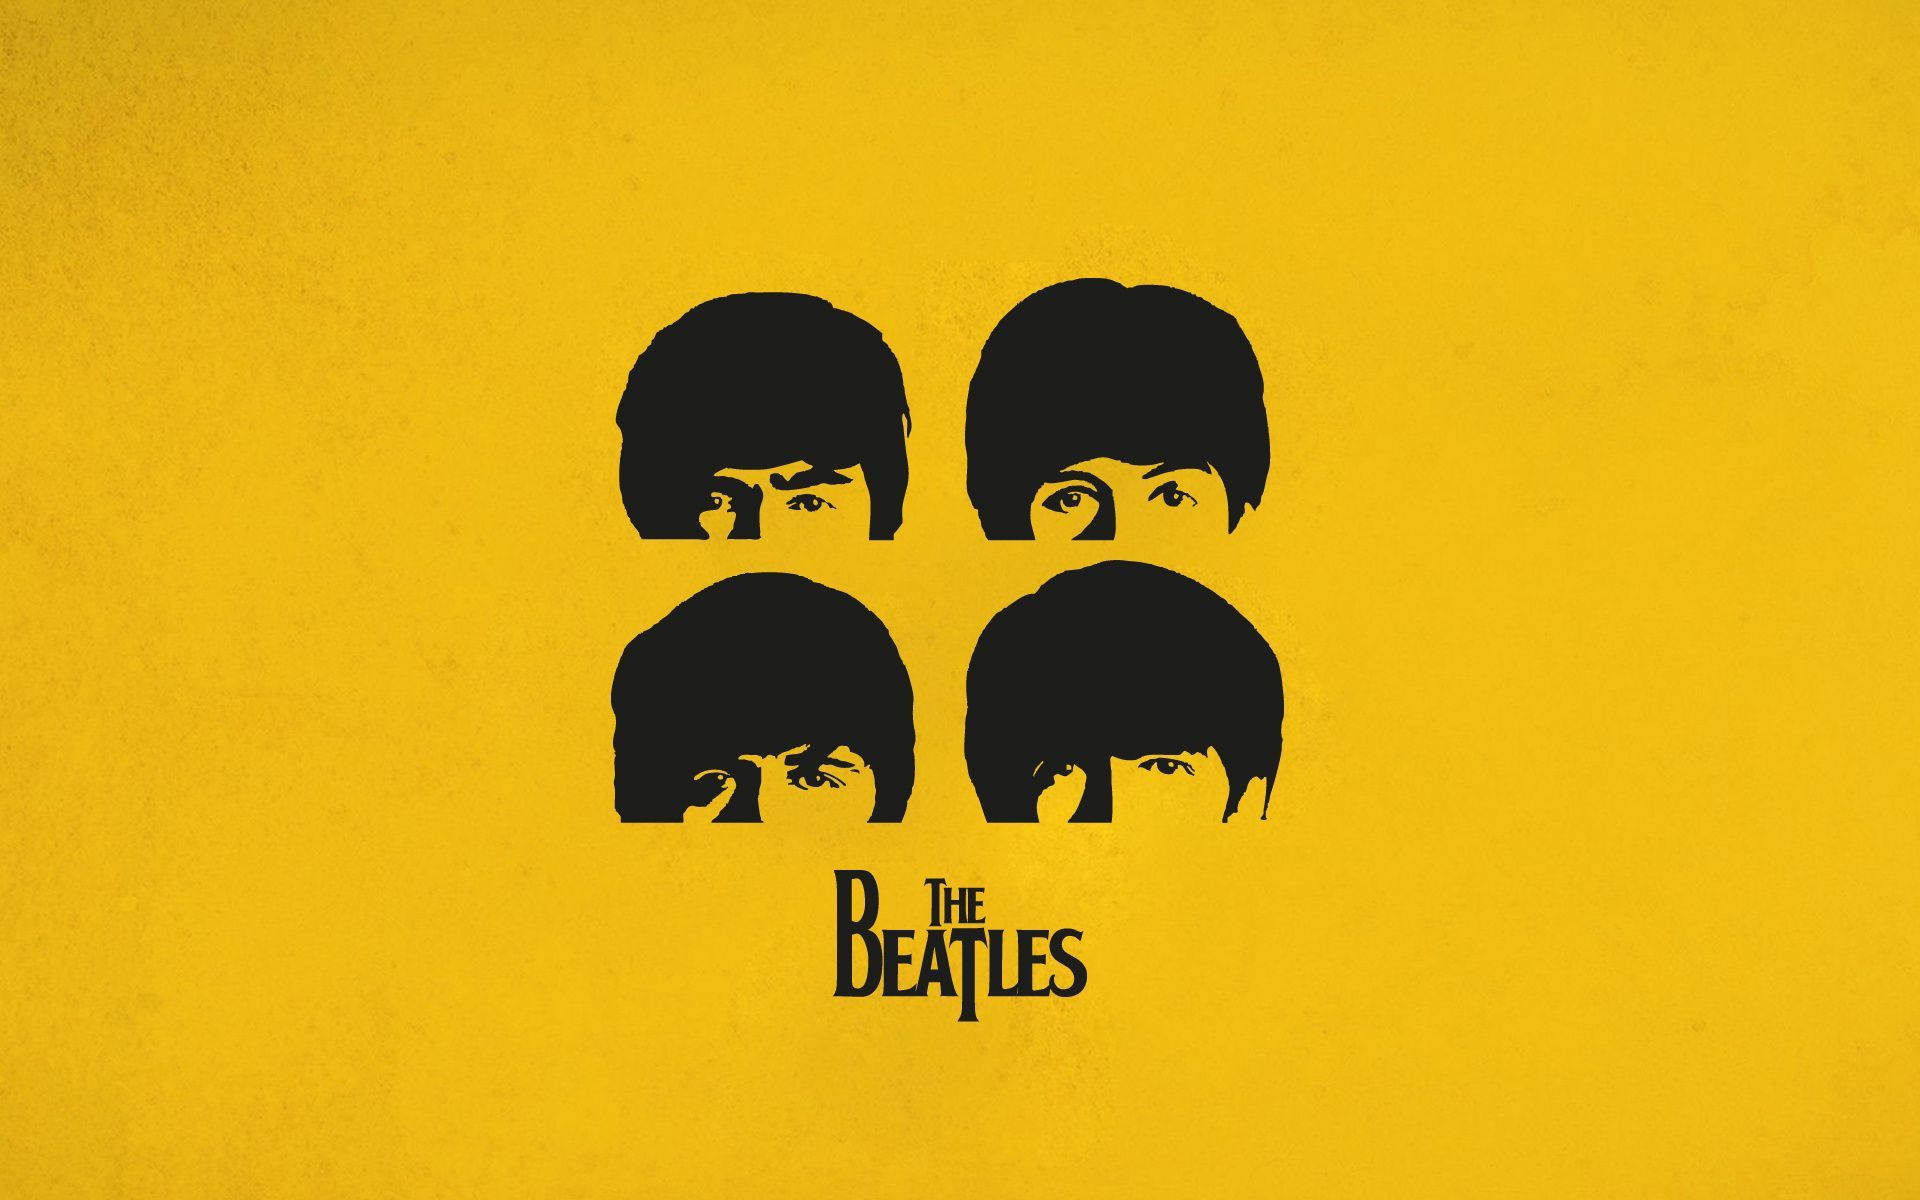 Top 999+ Beatles Wallpaper Full HD, 4K✅Free to Use